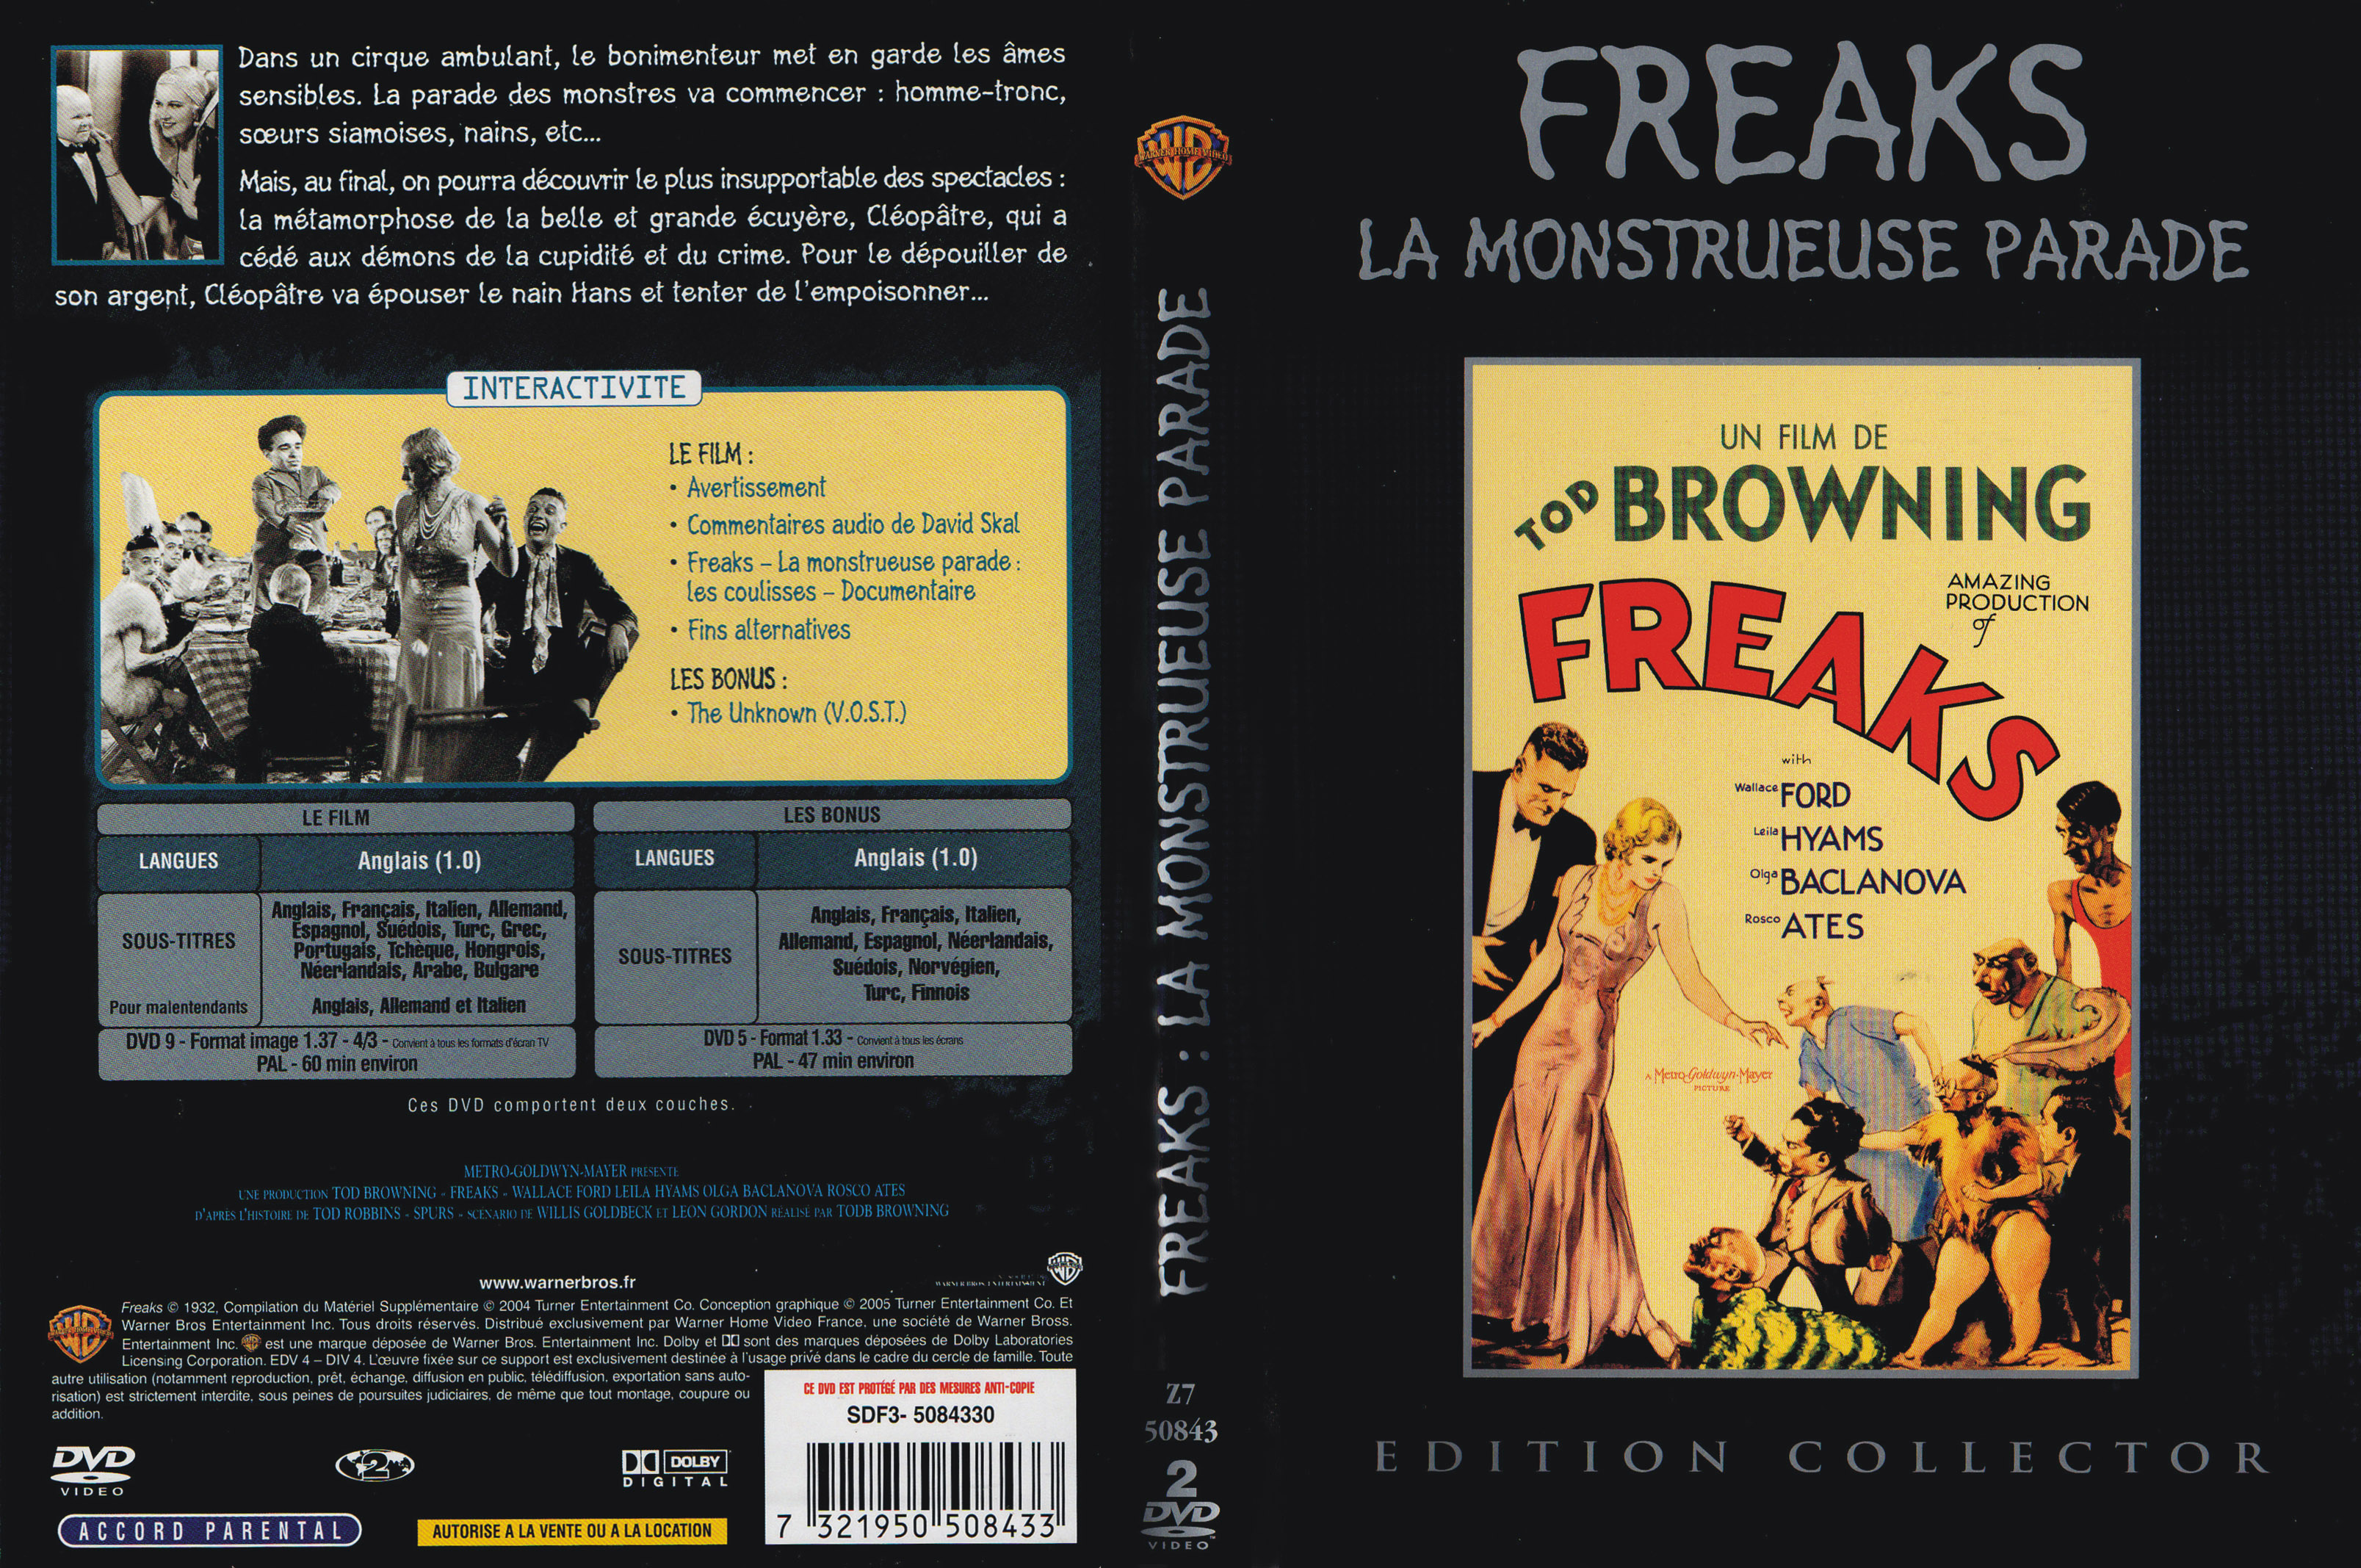 Jaquette DVD Freaks La monstrueuse parade v2